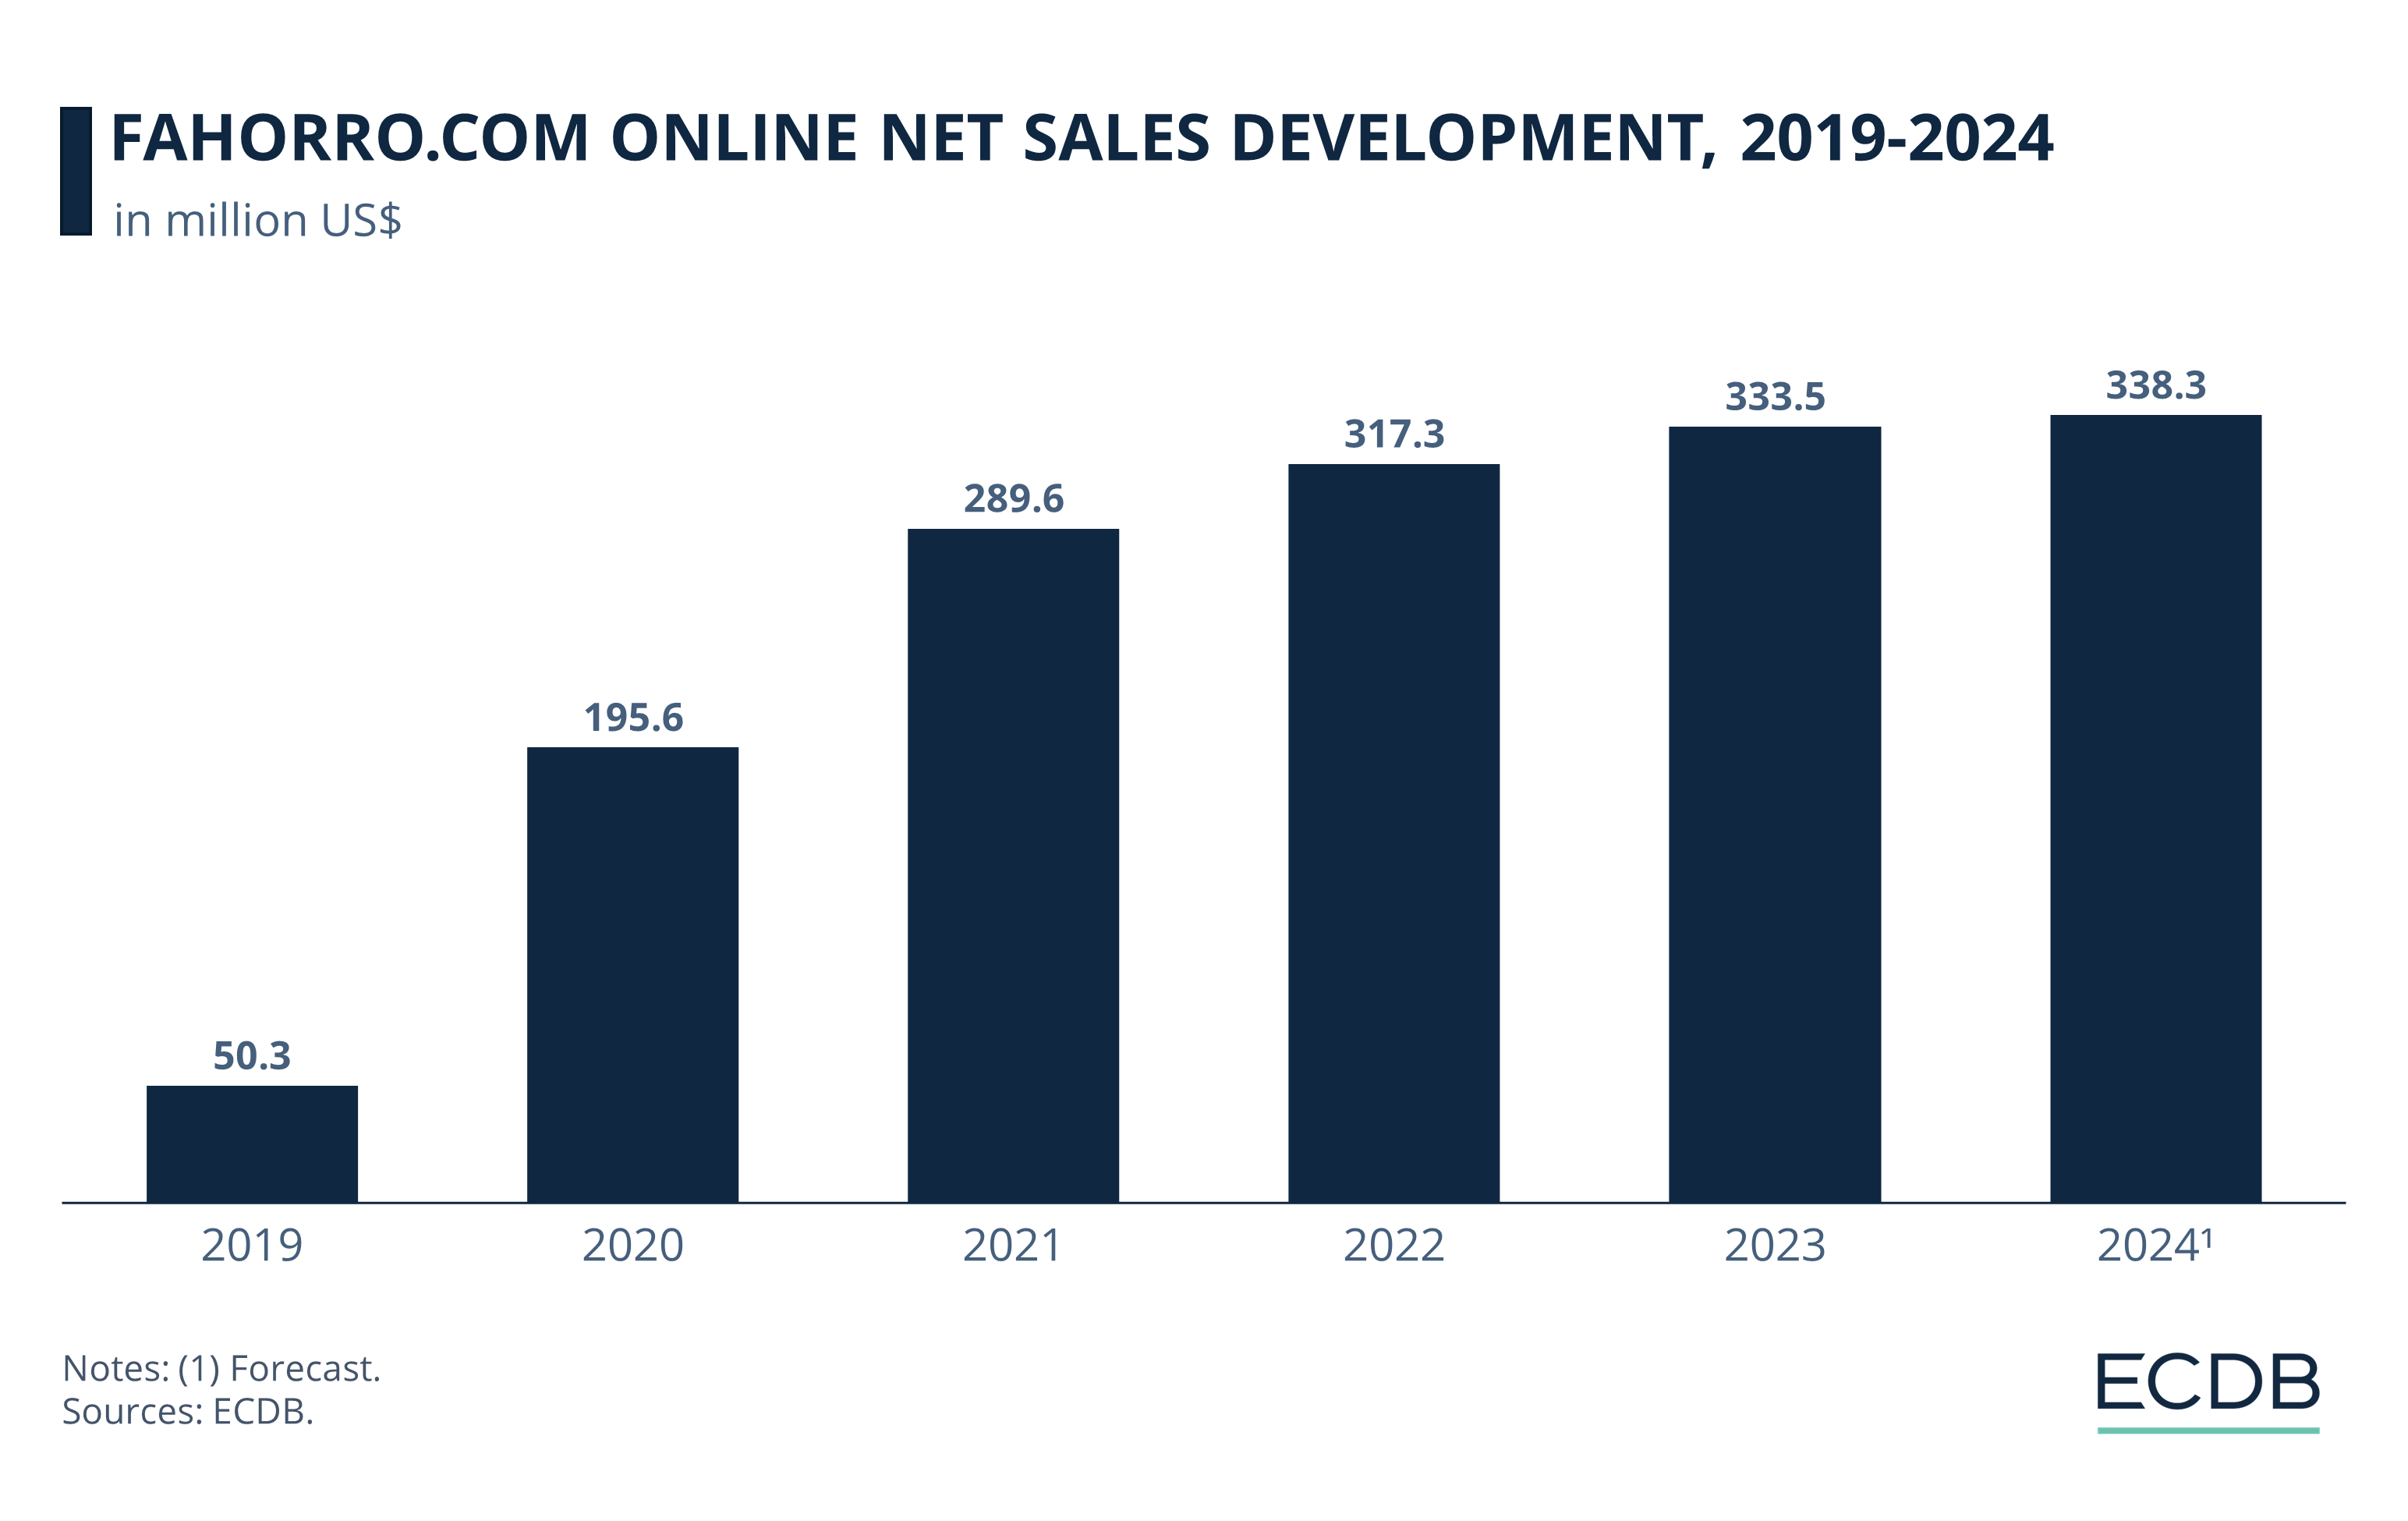 Fahorro.com Online Net Sales Development, 2019-2024